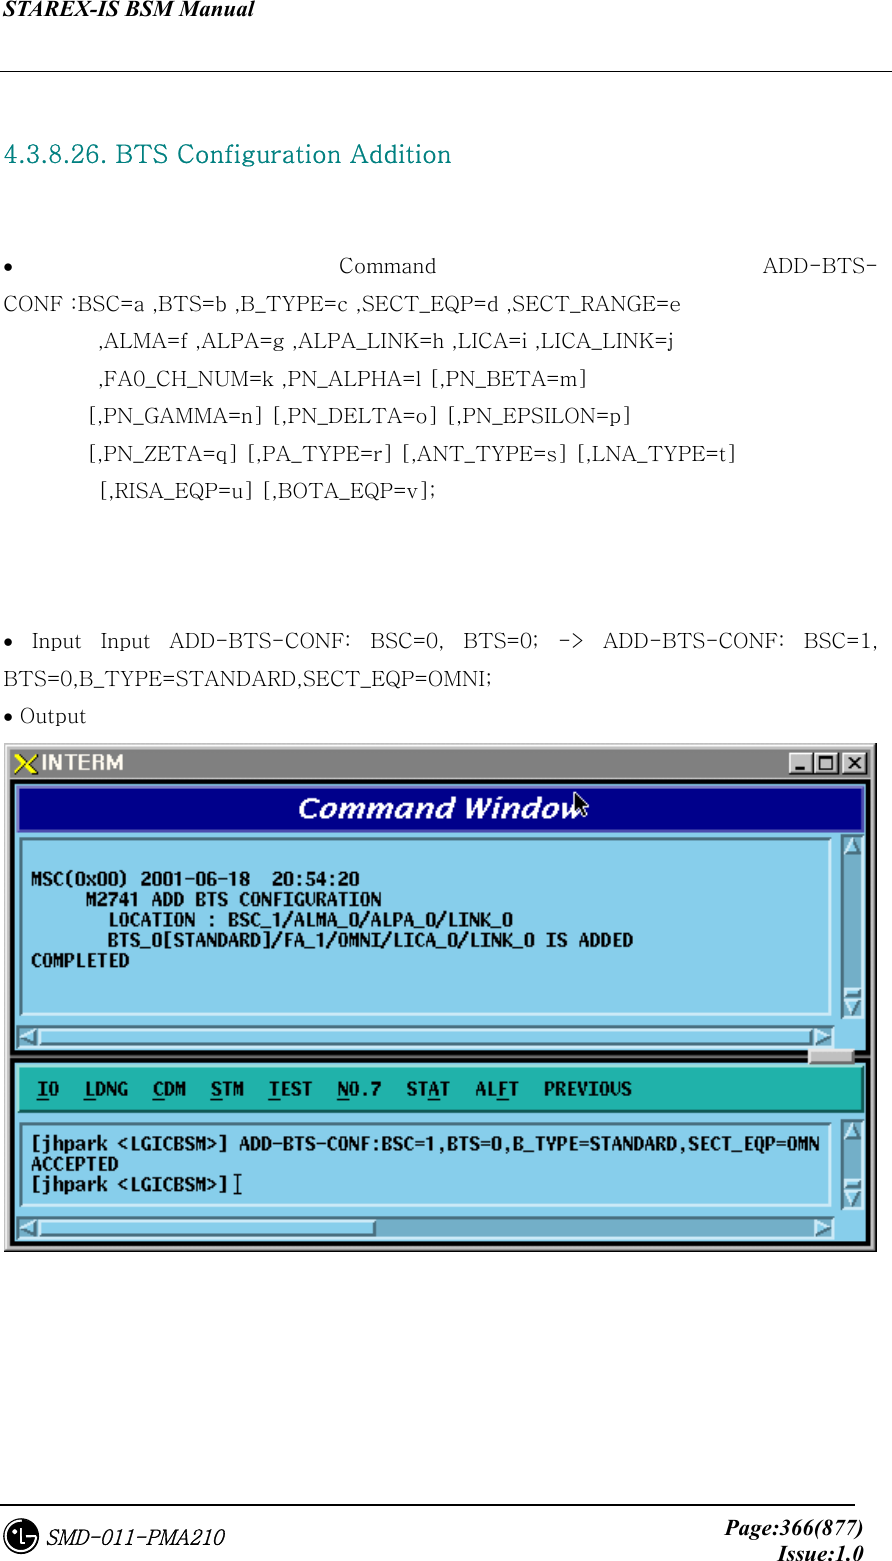 STAREX-IS BSM Manual     Page:366(877)Issue:1.0SMD-011-PMA210  4.3.8.26. BTS Configuration Addition    • Command ADD-BTS-CONF :BSC=a ,BTS=b ,B_TYPE=c ,SECT_EQP=d ,SECT_RANGE=e          ,ALMA=f ,ALPA=g ,ALPA_LINK=h ,LICA=i ,LICA_LINK=j          ,FA0_CH_NUM=k ,PN_ALPHA=l [,PN_BETA=m] [,PN_GAMMA=n] [,PN_DELTA=o] [,PN_EPSILON=p]   [,PN_ZETA=q] [,PA_TYPE=r] [,ANT_TYPE=s] [,LNA_TYPE=t]          [,RISA_EQP=u] [,BOTA_EQP=v];    •  Input  Input  ADD-BTS-CONF:  BSC=0,  BTS=0;  -&gt;  ADD-BTS-CONF:  BSC=1, BTS=0,B_TYPE=STANDARD,SECT_EQP=OMNI; • Output  